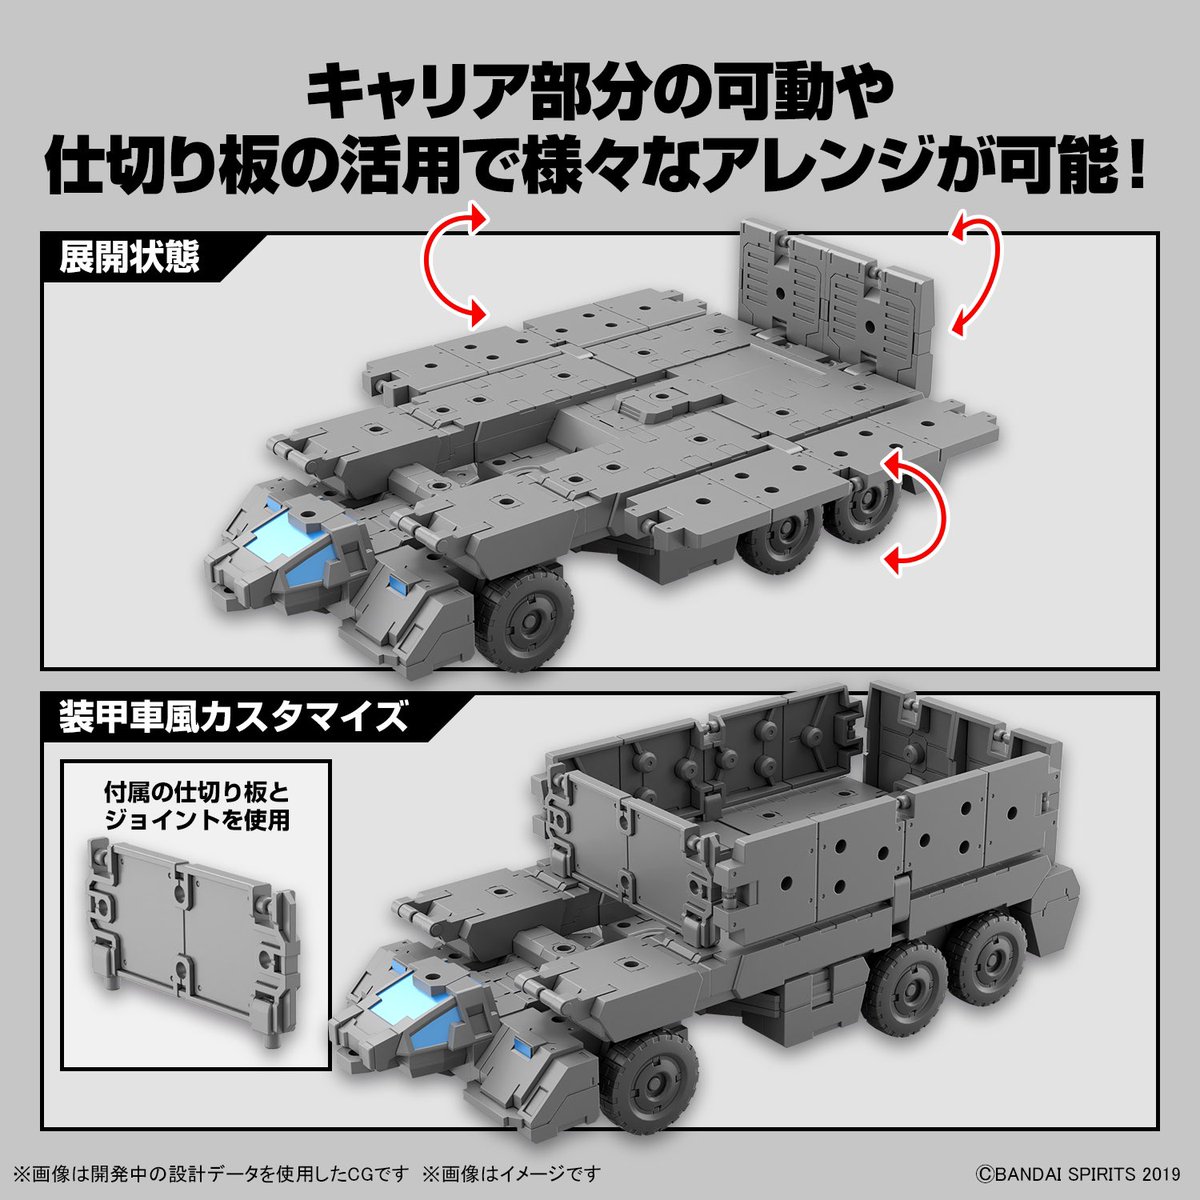 military vehicle no humans motor vehicle ground vehicle tank military vehicle focus  illustration images